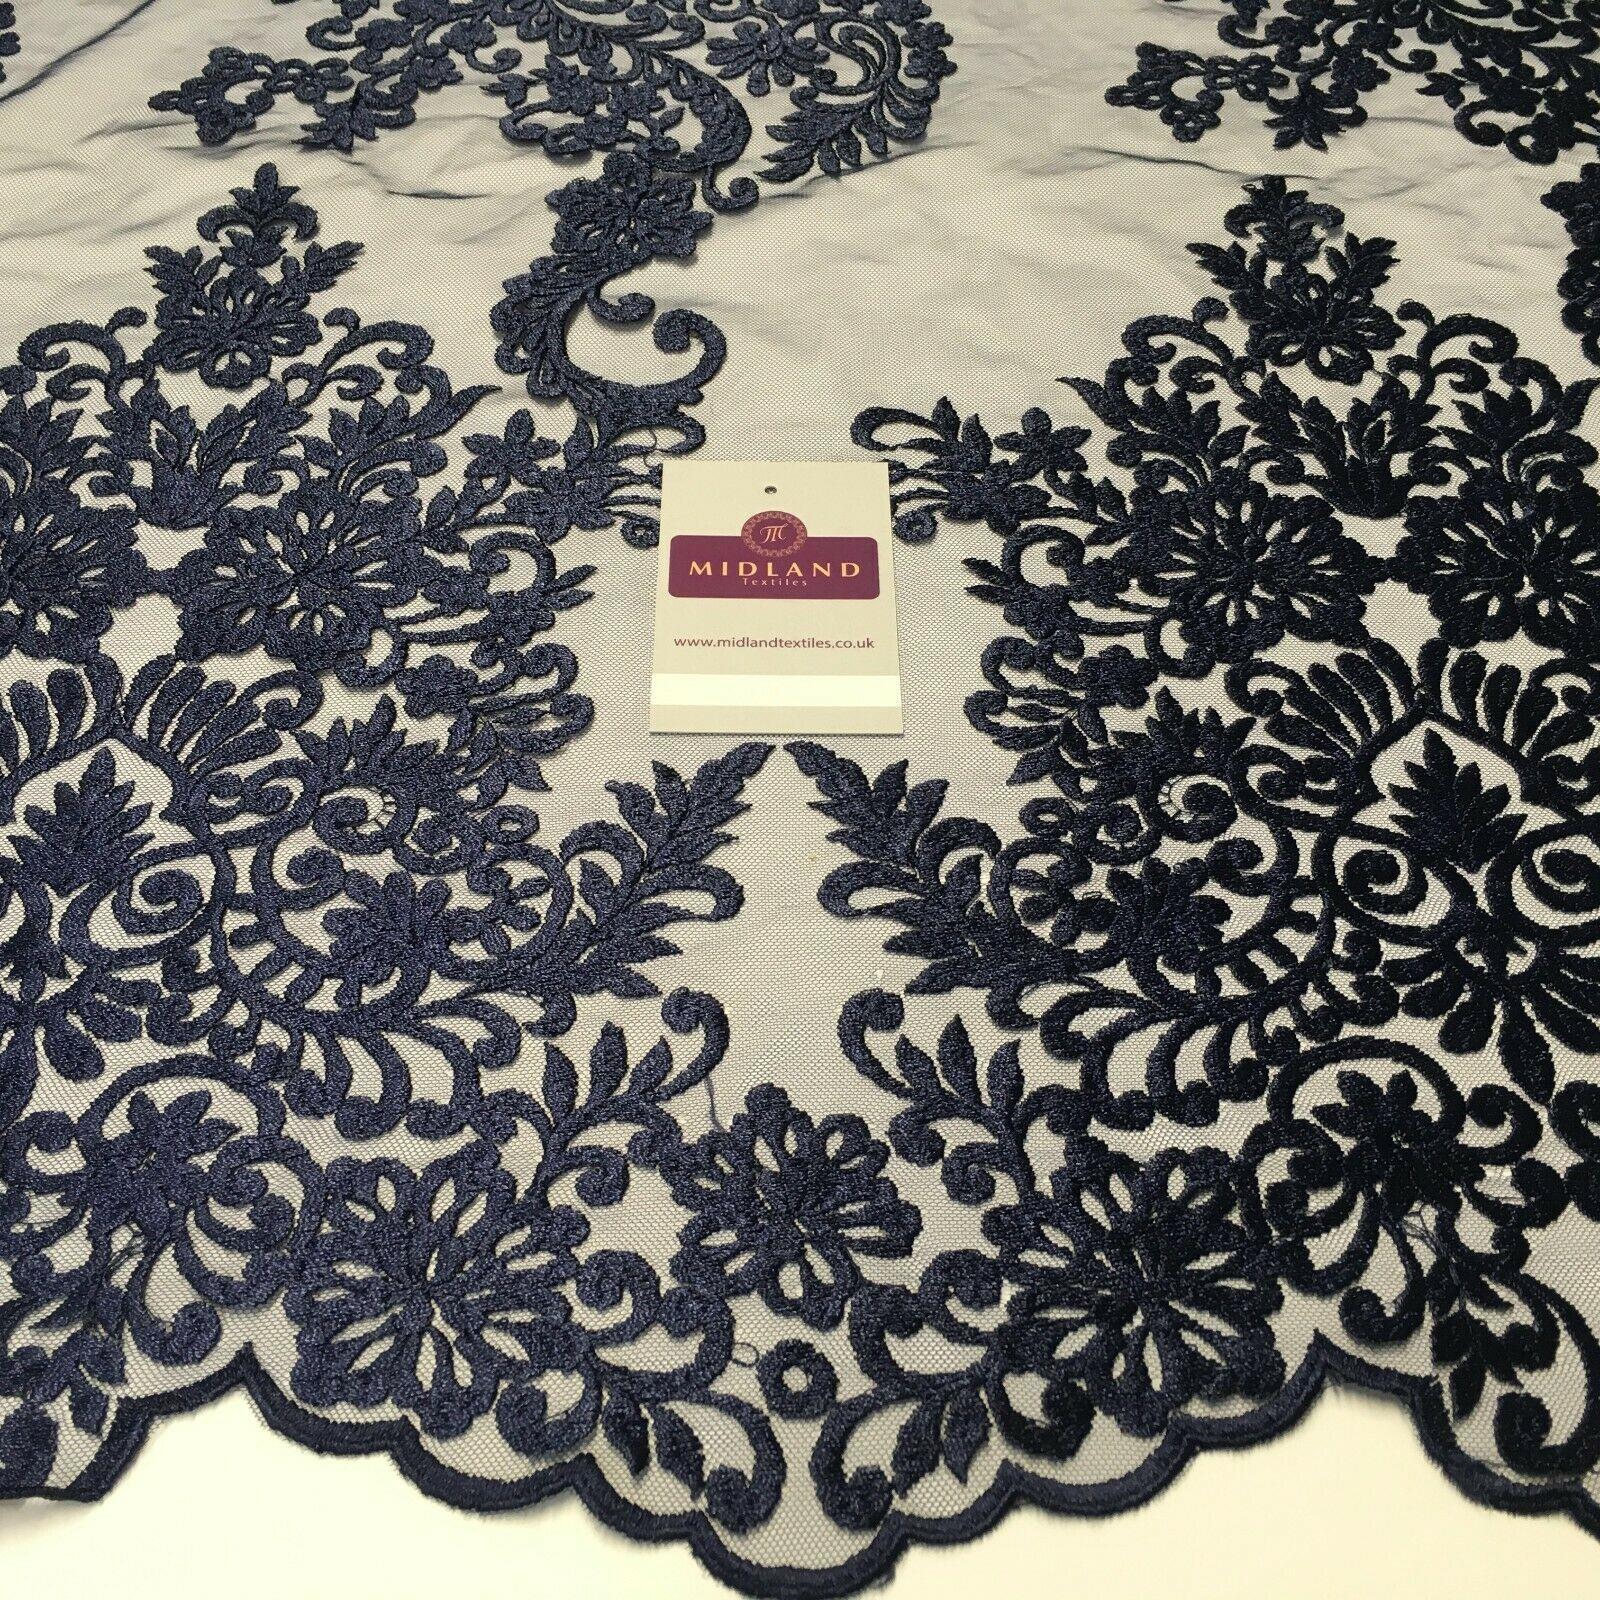 Paisley Embroidered Double Border Ungaro Net Dress tulle Fabric  MV1048